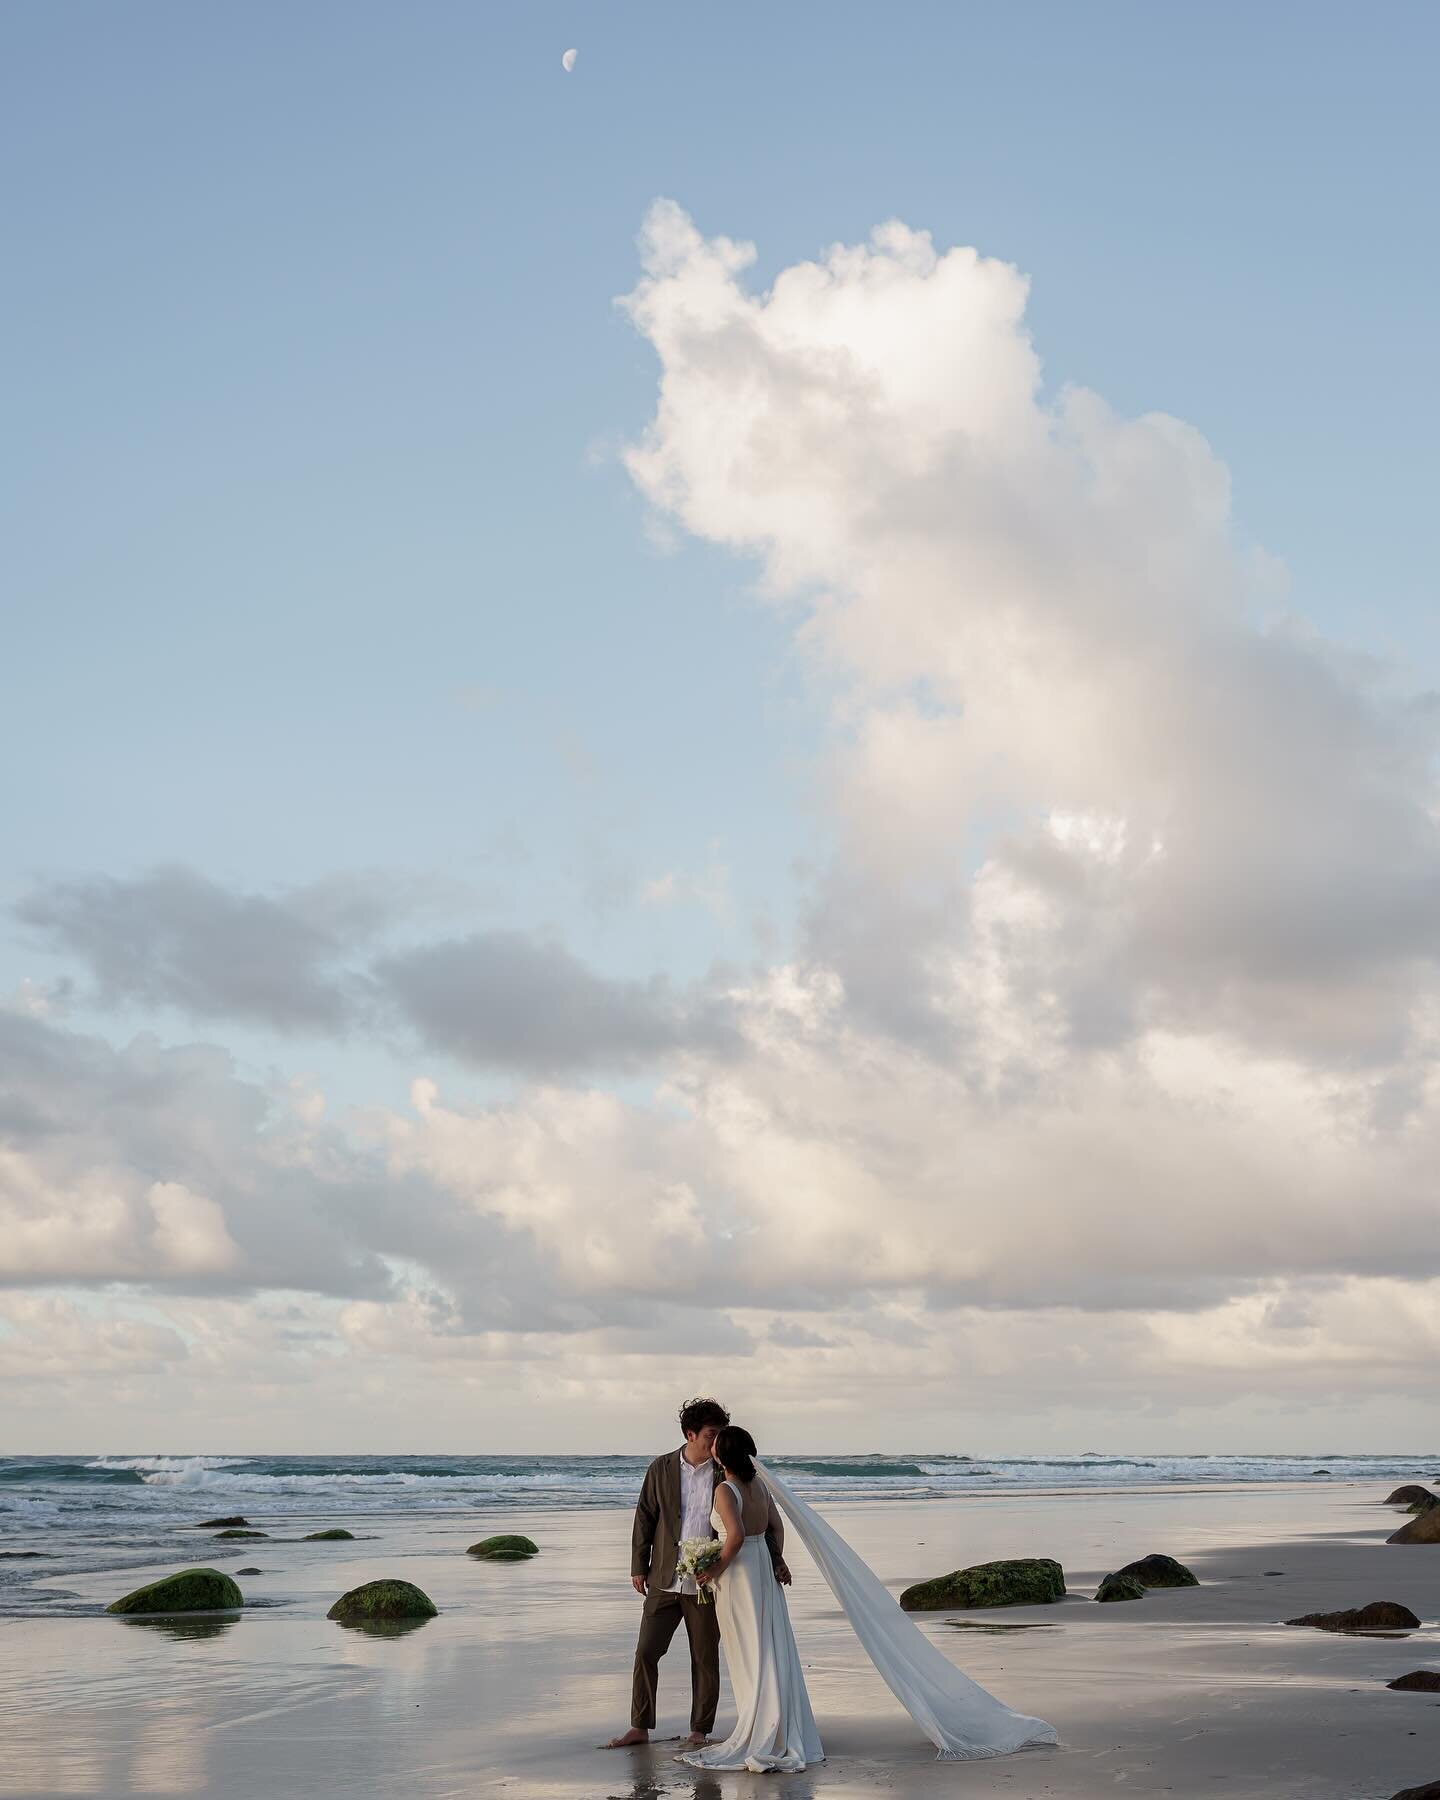 Just you and I 

#byronbayweddings 
#byronbayweddingphotographer 
#オーストラリアウェディング
#海外ウェディング